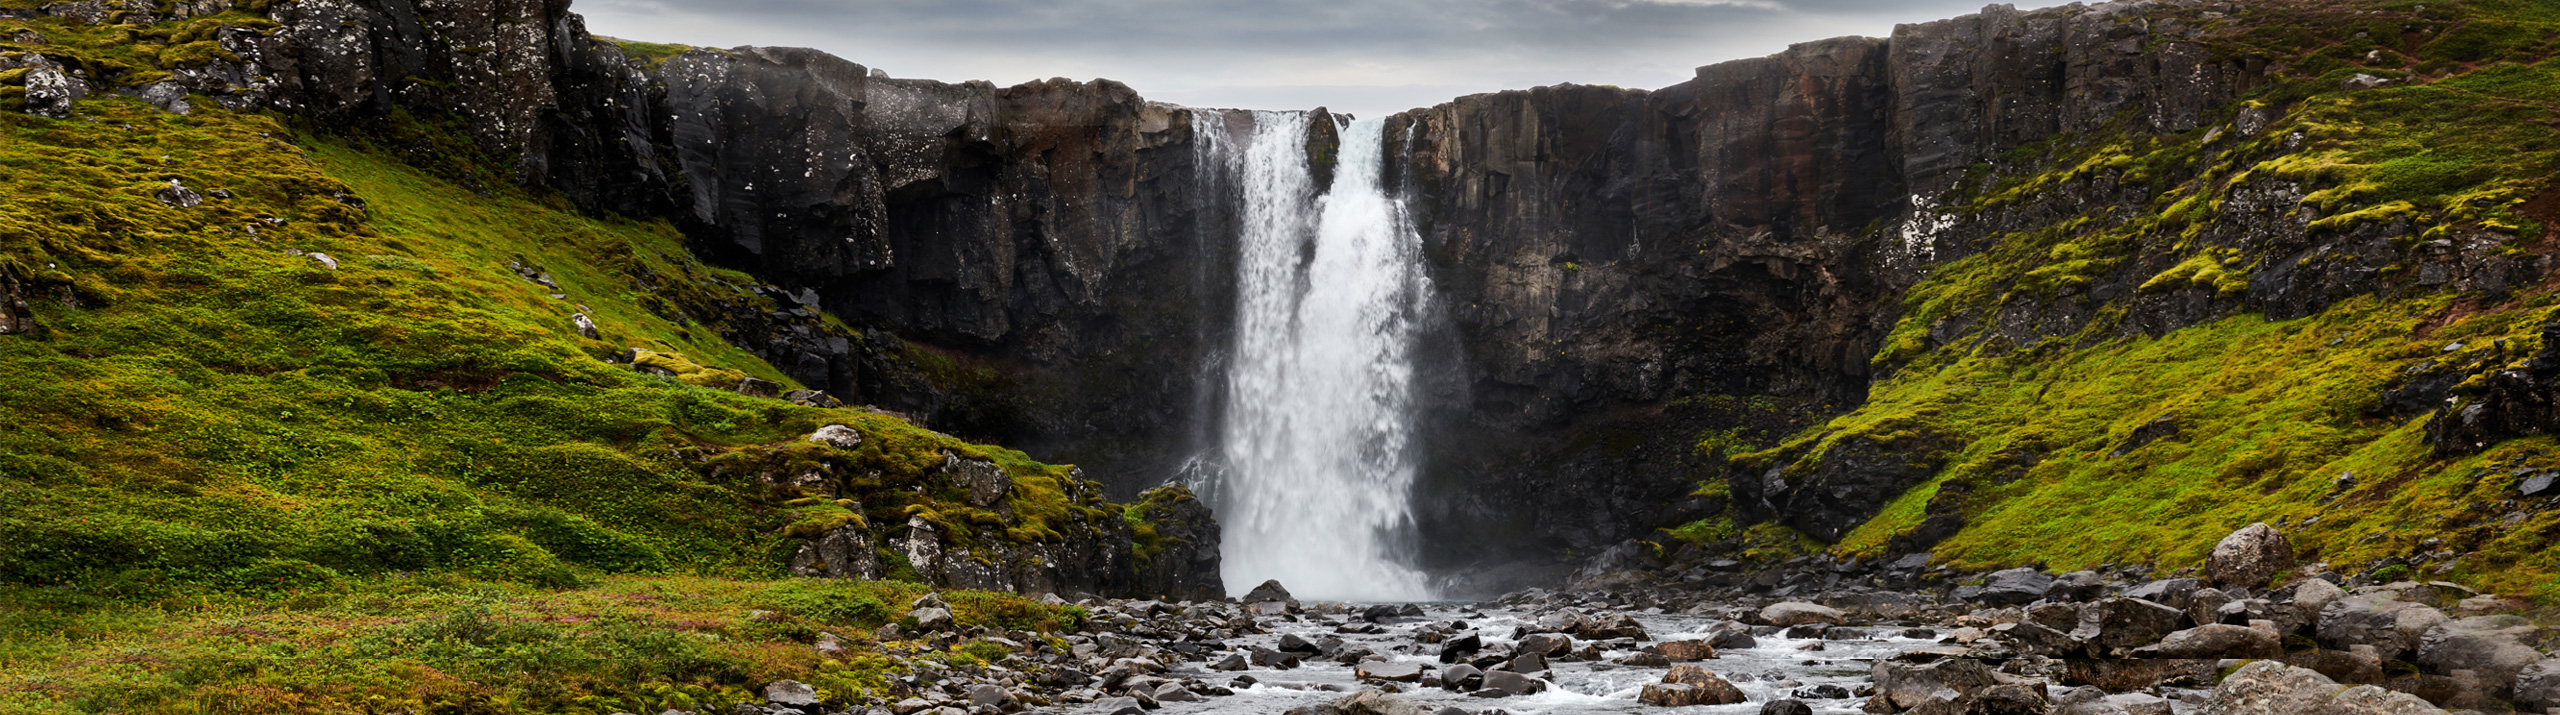 Gufufoss vandfaldet - vandfald i Island